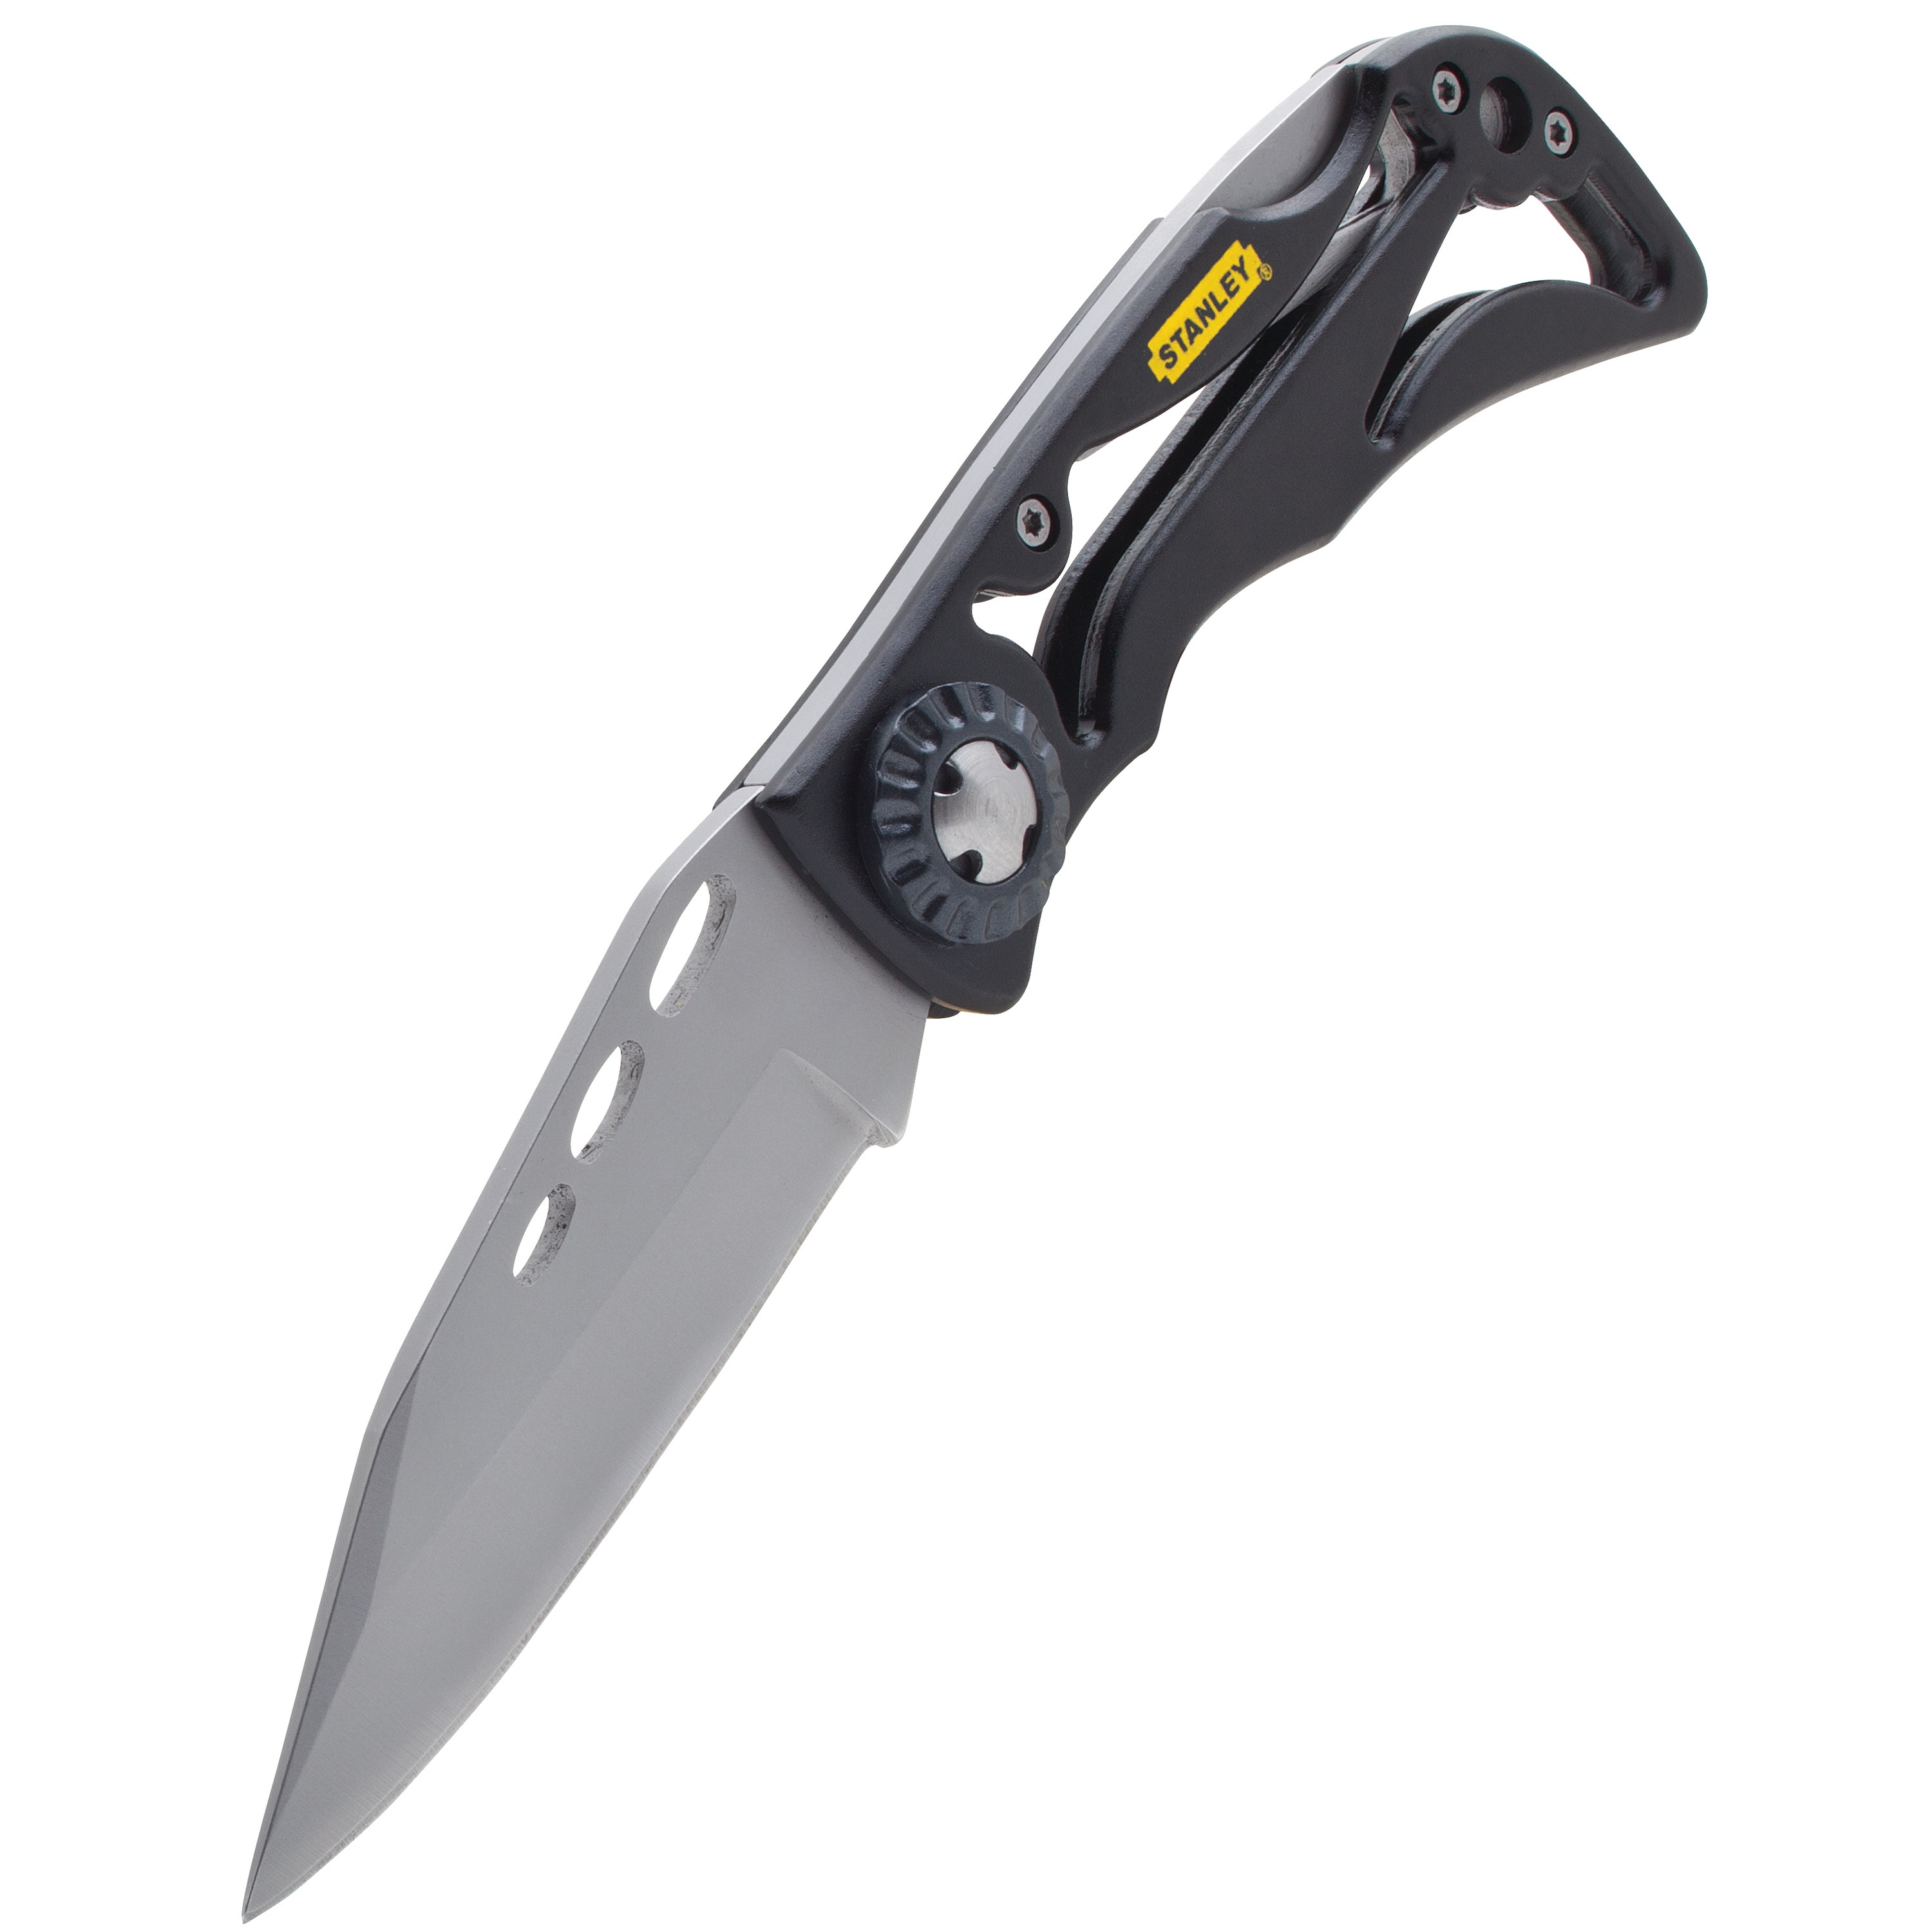 Stanley Tools - 714 in Skeleton Frame Pocket Knife - STHT10253